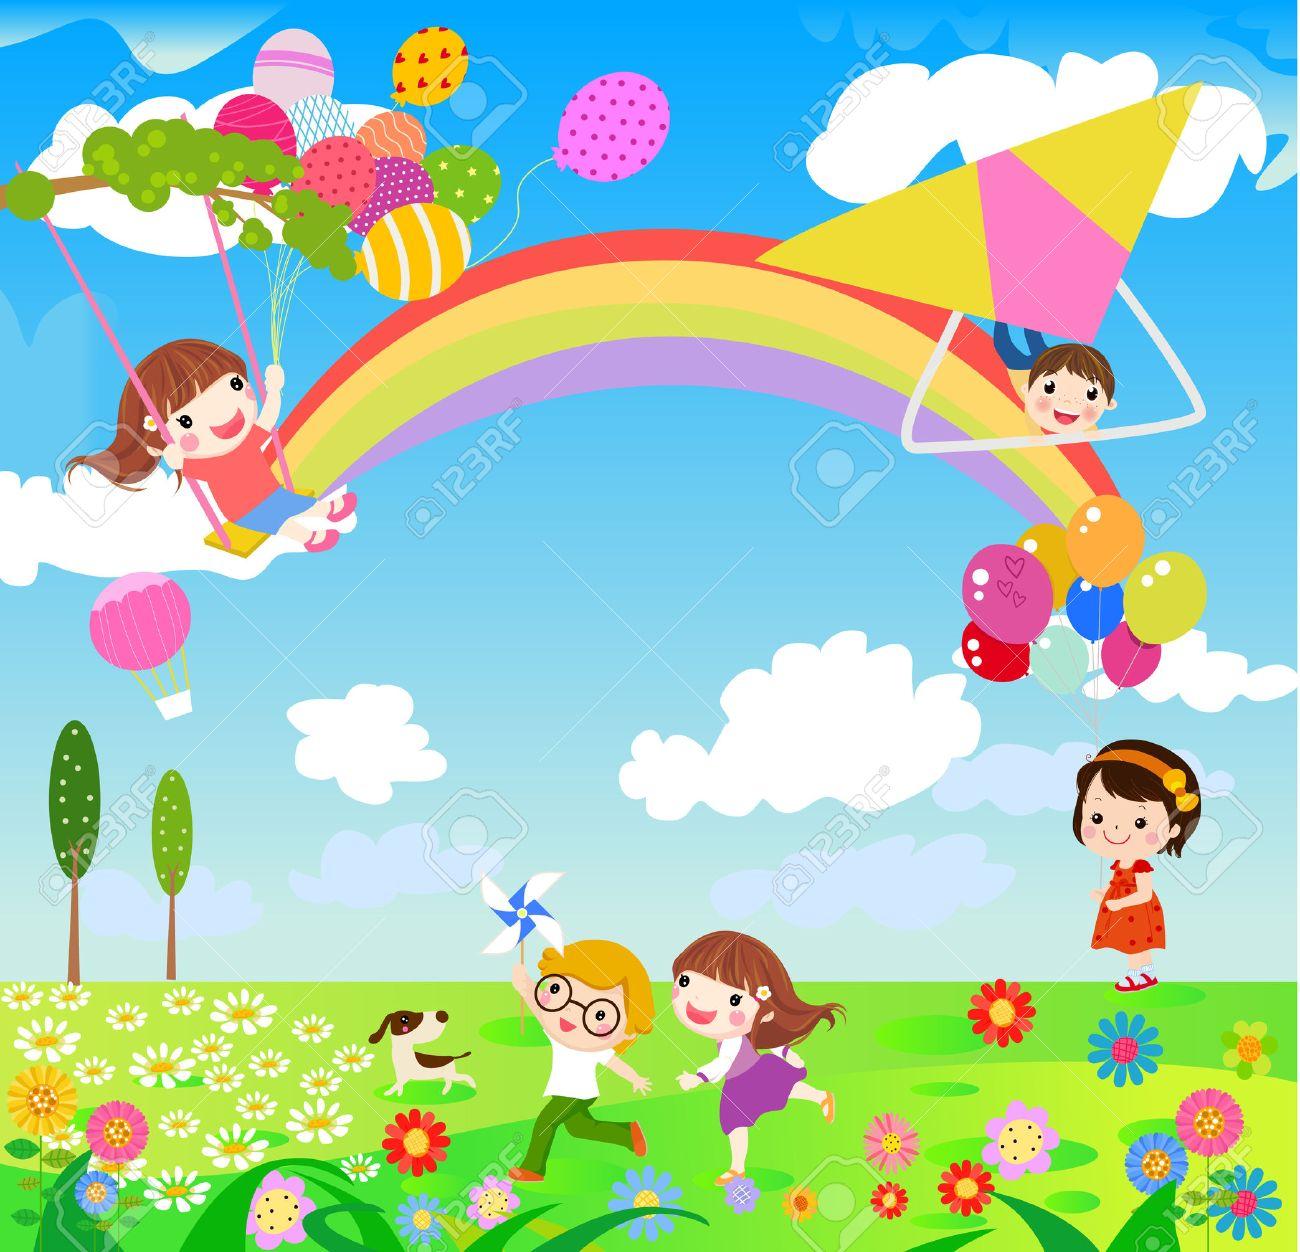 Clipart Spring Season Image For Kids